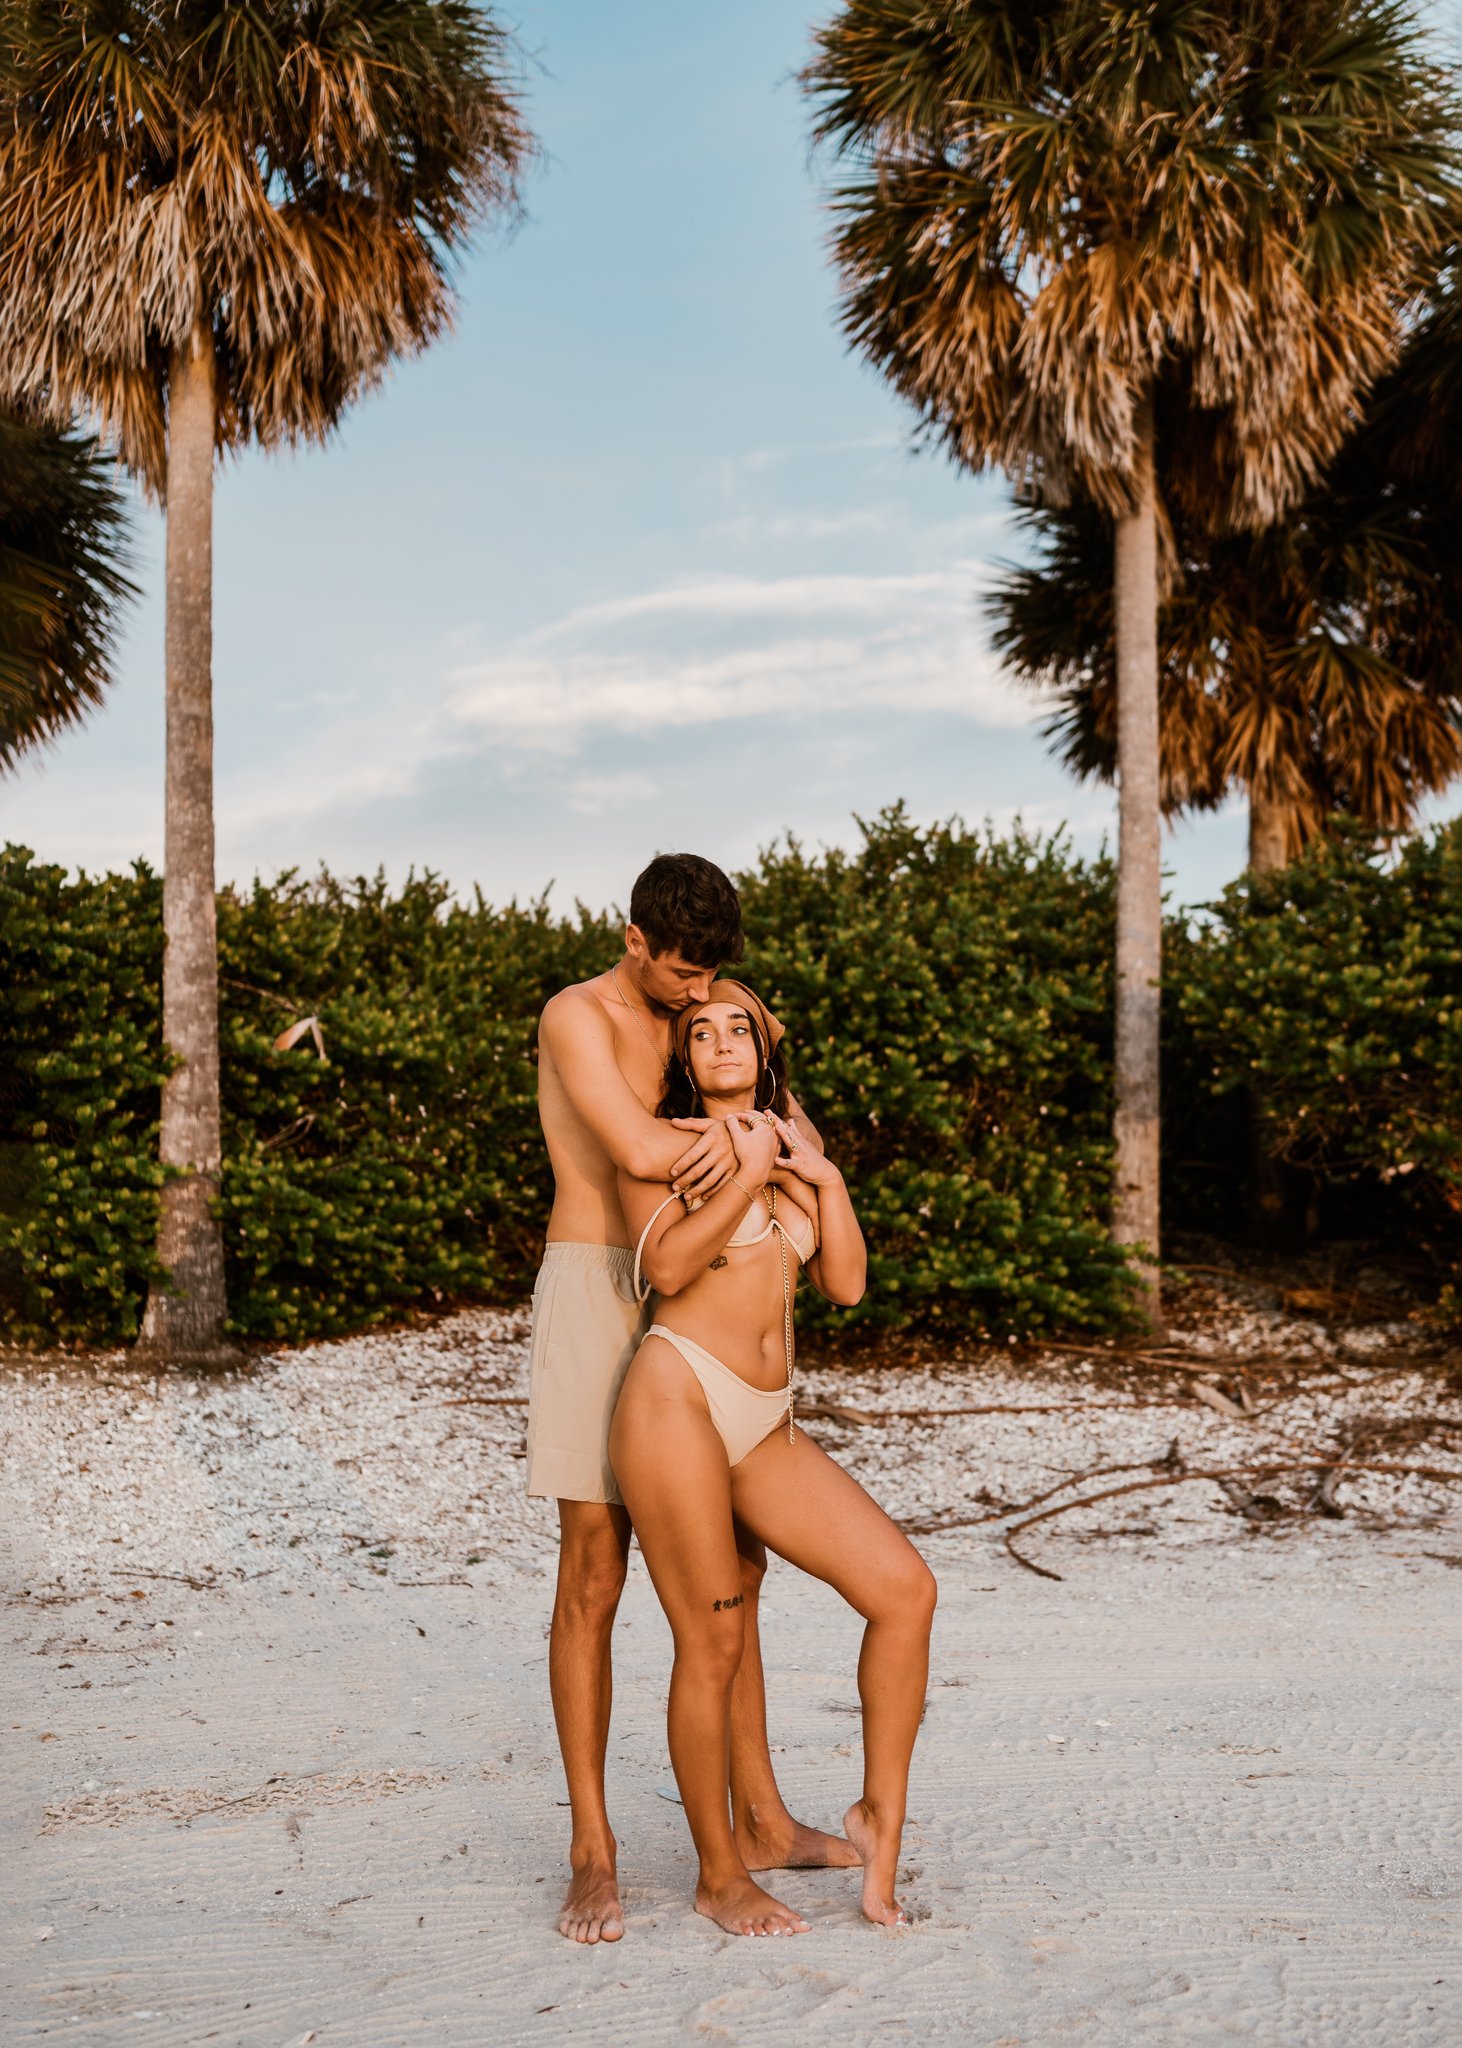 Chasing-Creative-Photography-Sanibel-Captiva-Florida-Beach-Photoshoot-16